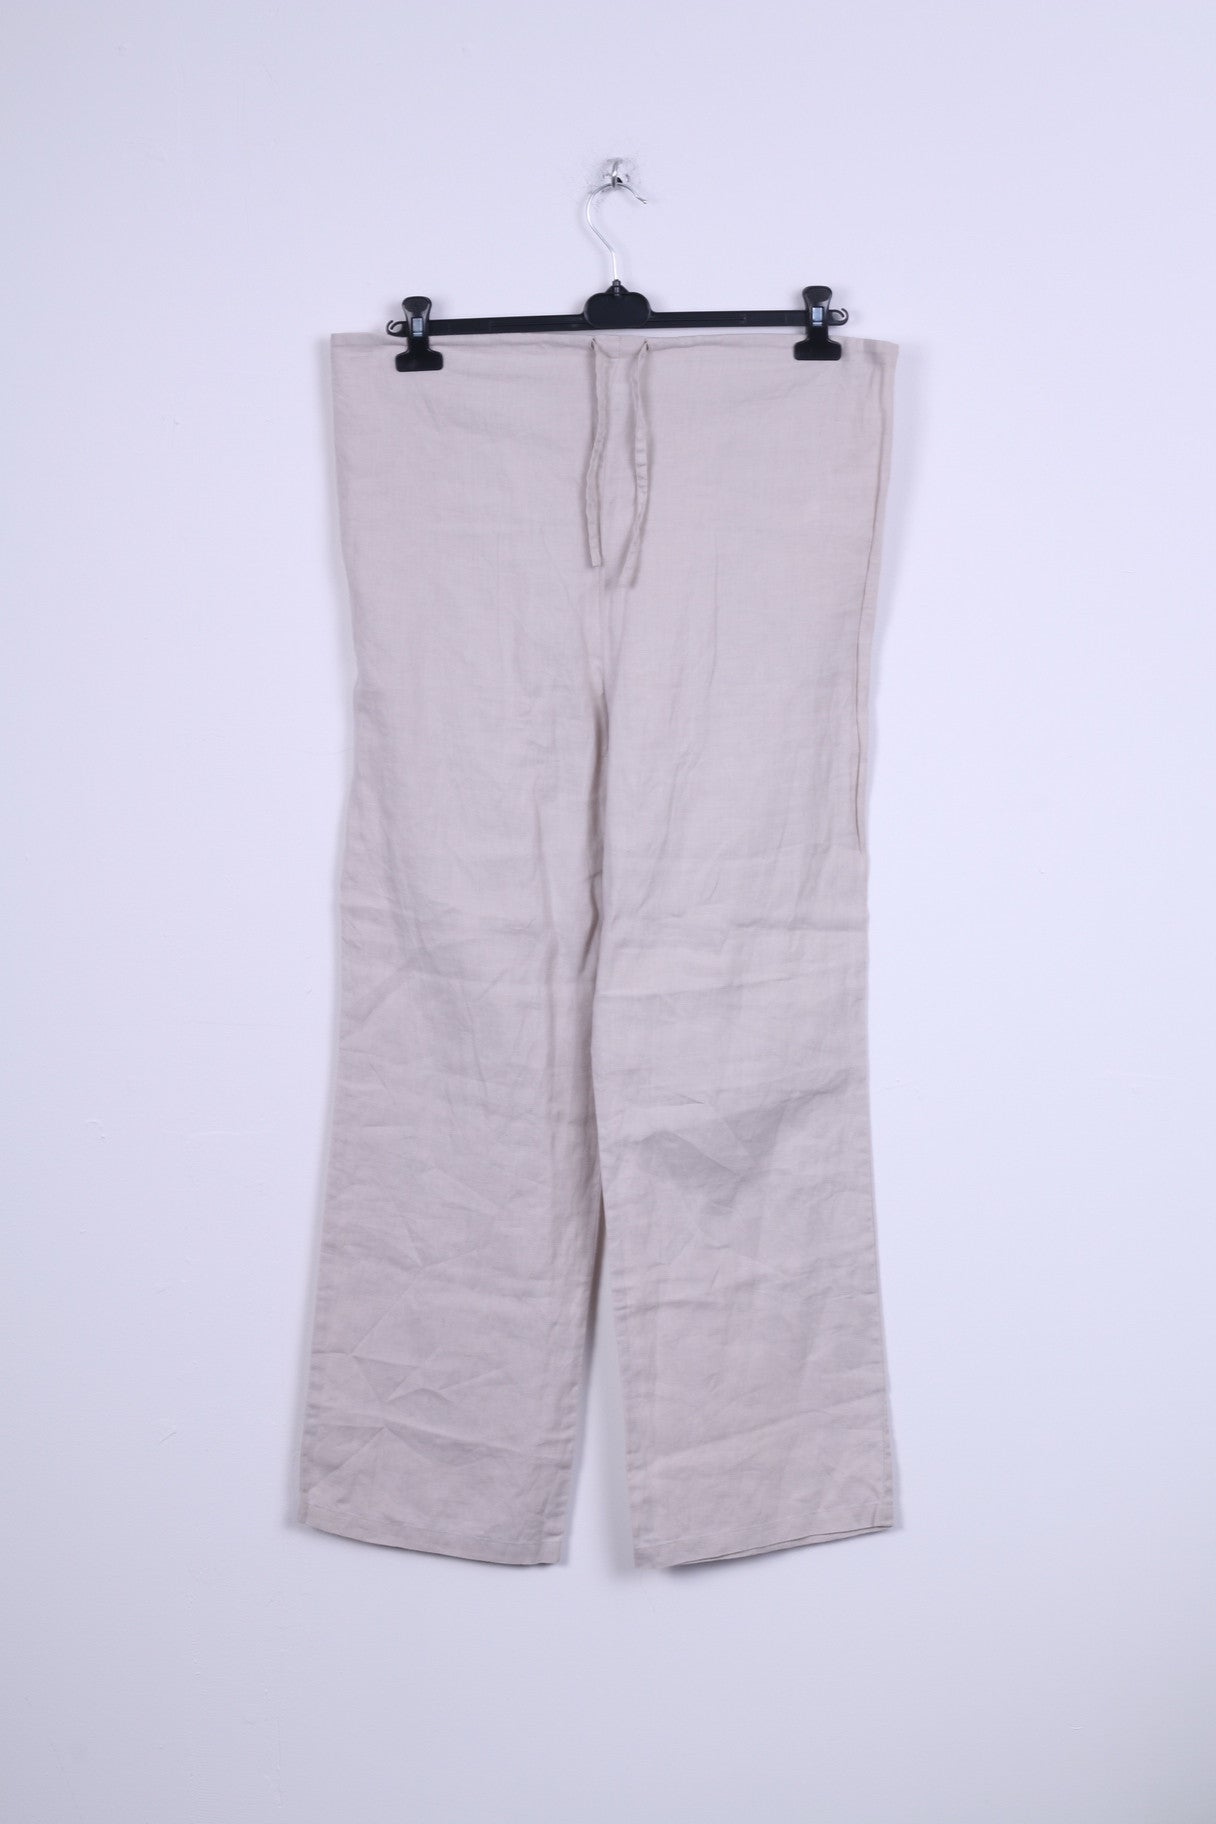 Blooming Marvellous Womens 12 Trousers Linen Beige Pants Pregnancy Summer